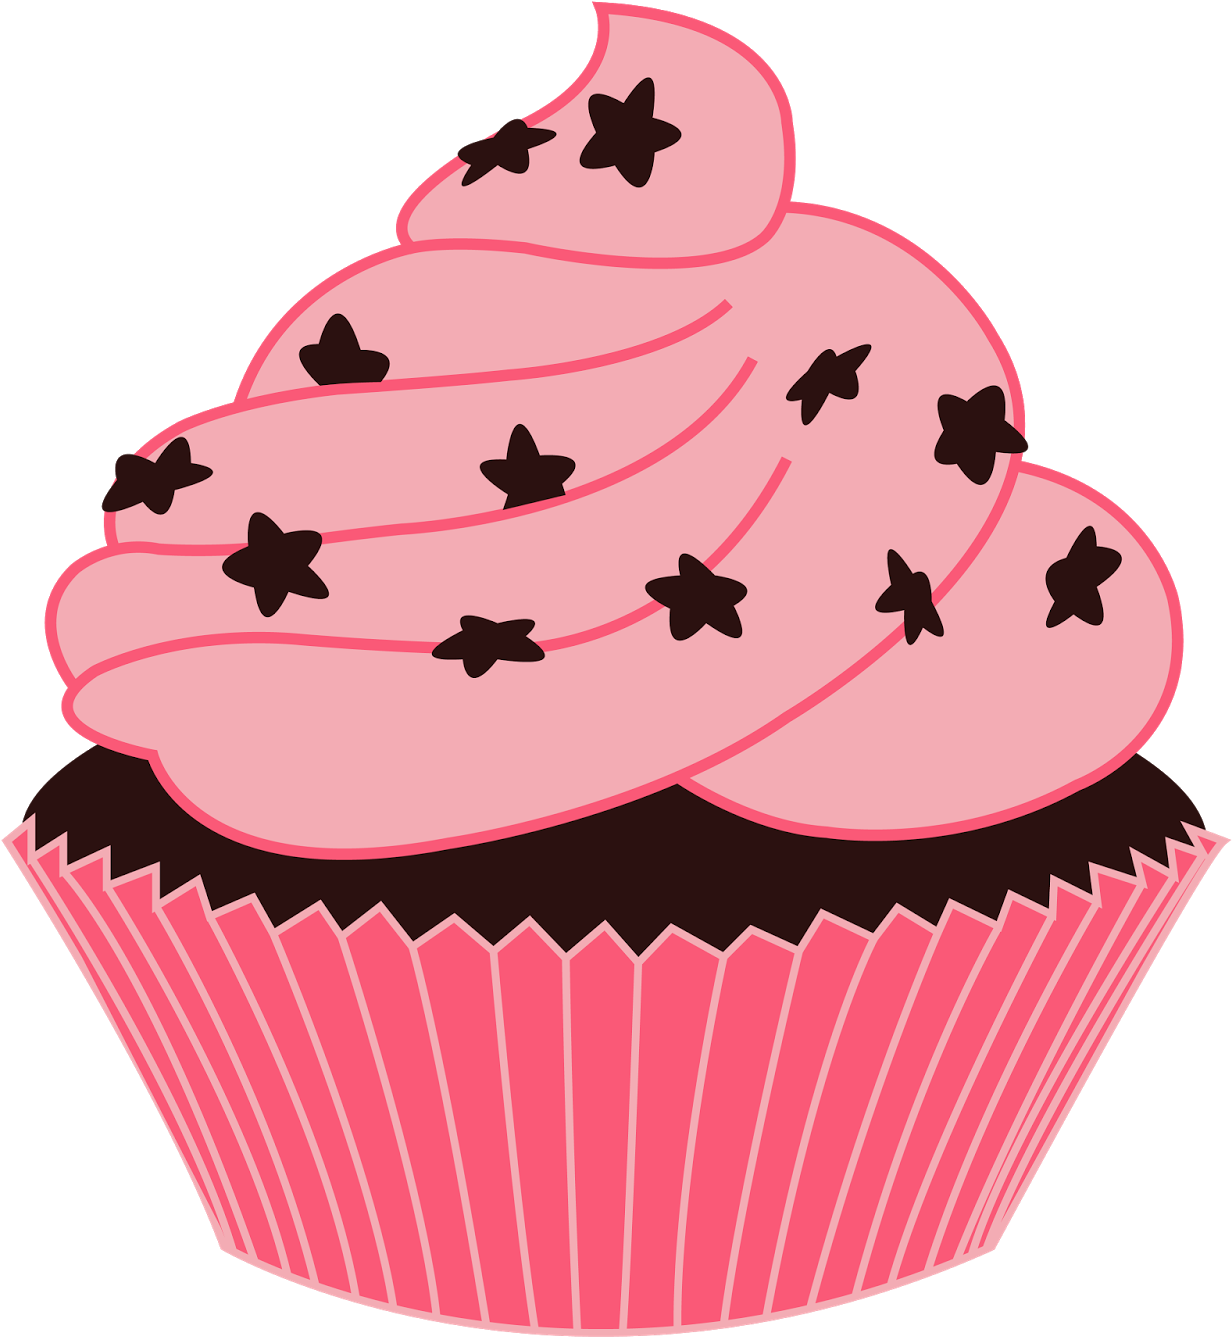 Free Cupcake Silhouette Png, Download Free Cupcake Silhouette Png png